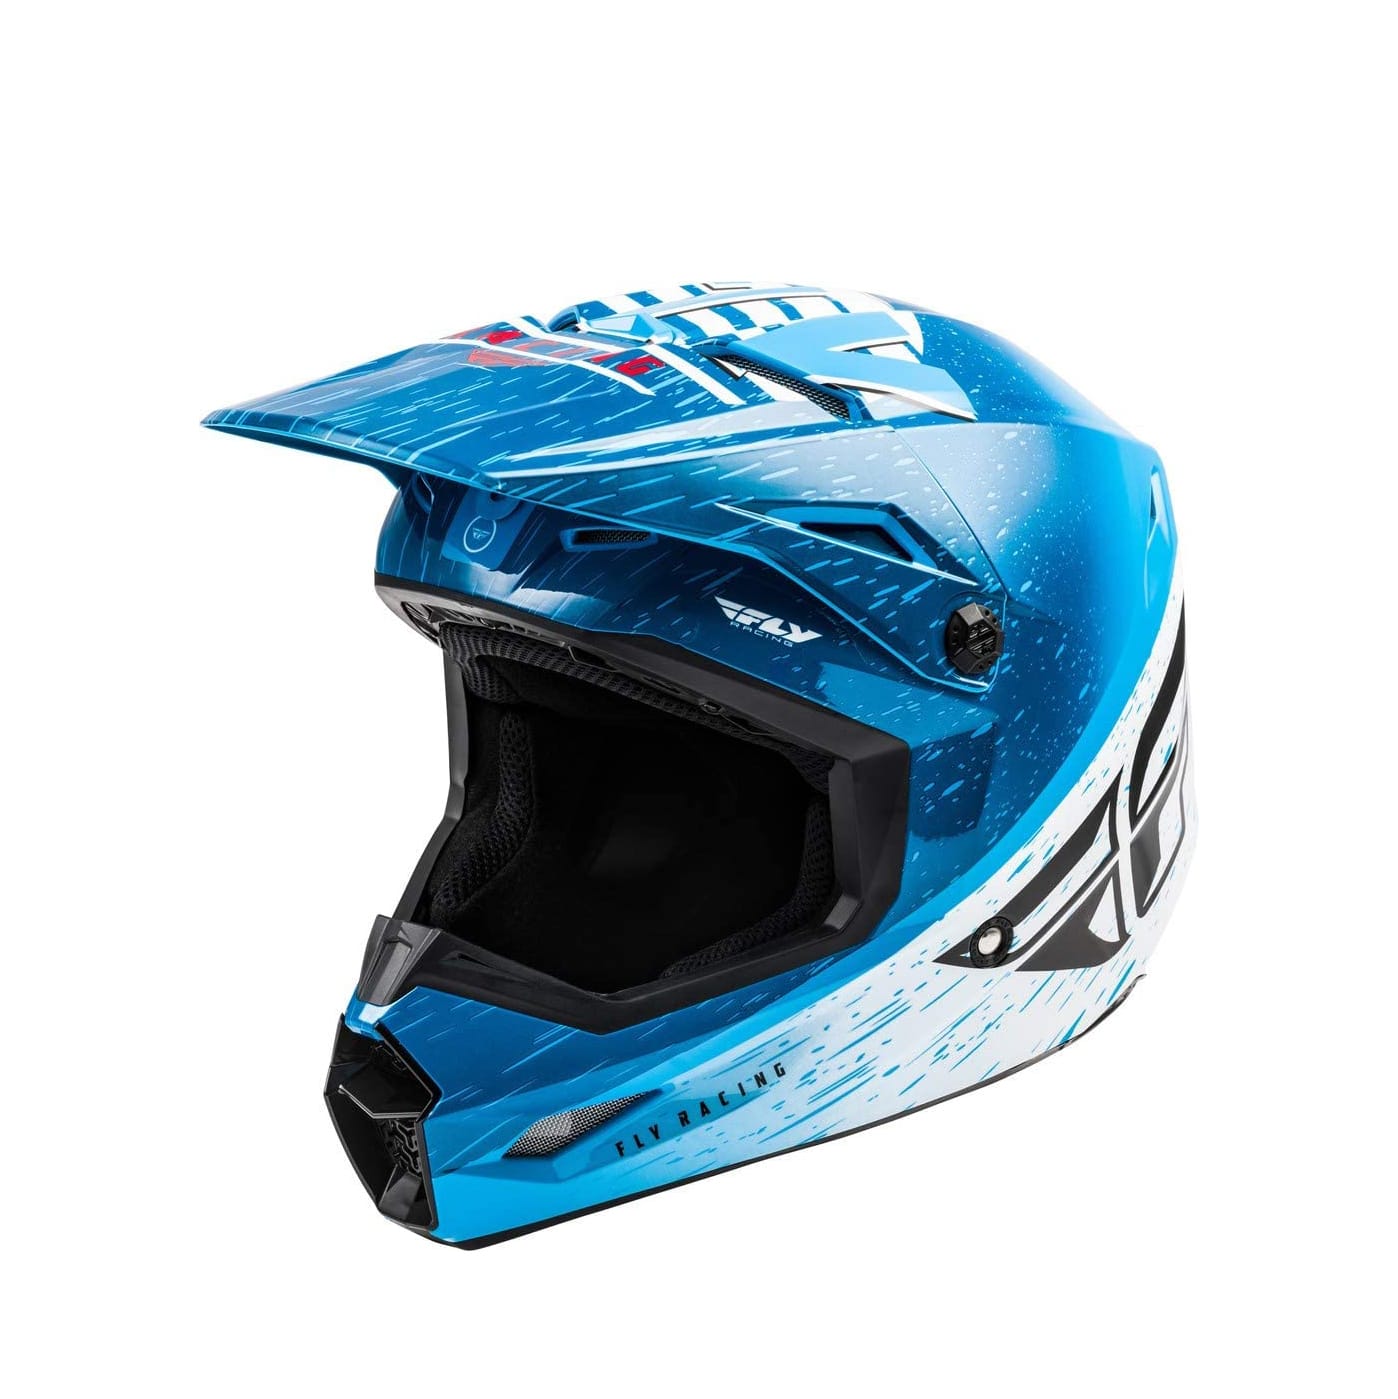 Top 10 Best Off-Road Helmets in 2021 Review | Buyer's Guide